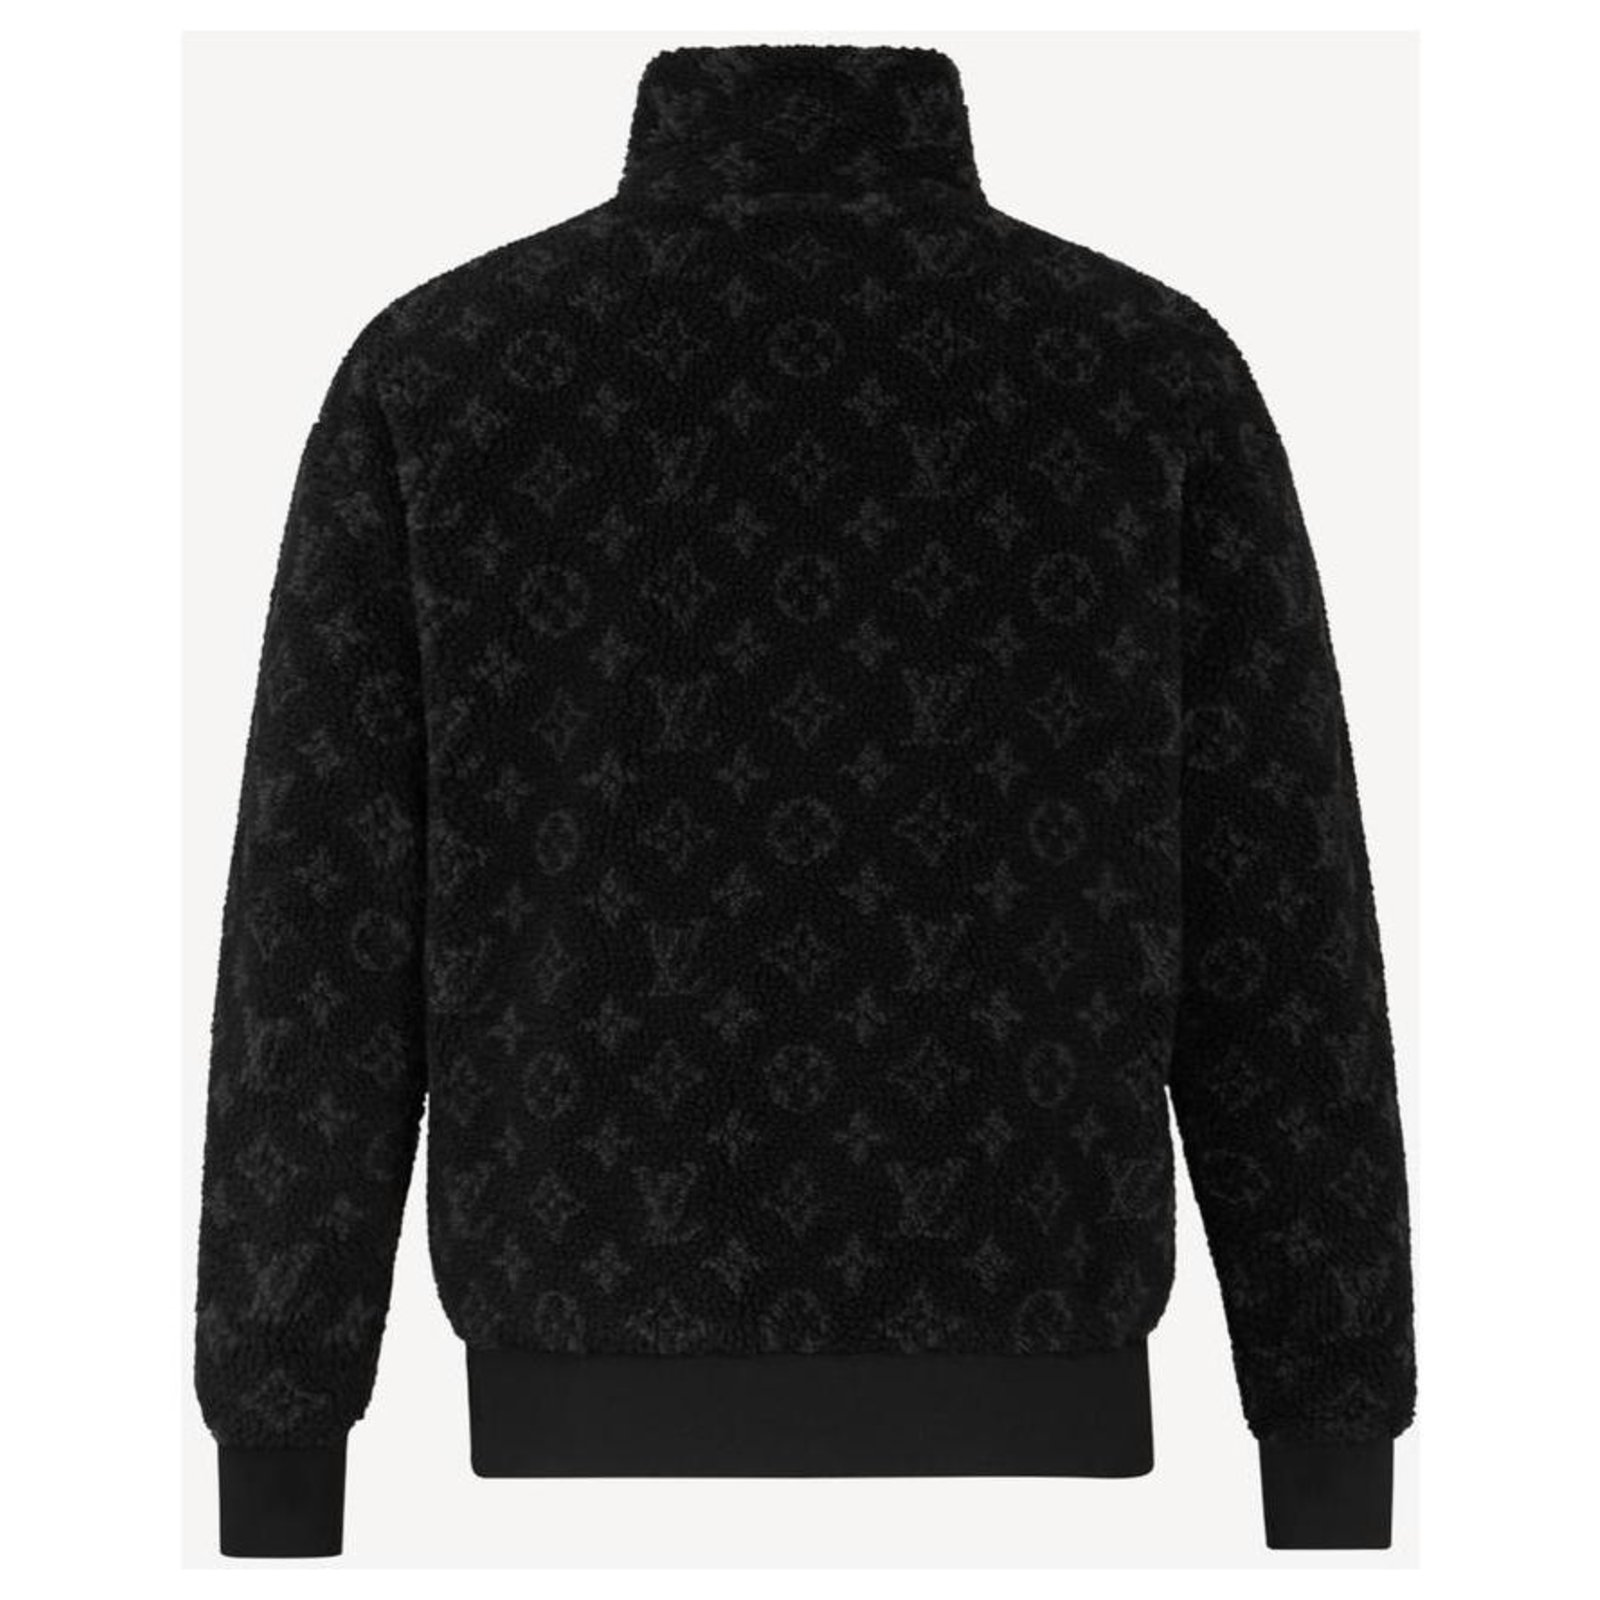 Louis Vuitton Long-Sleeved Lv Zip Jacket